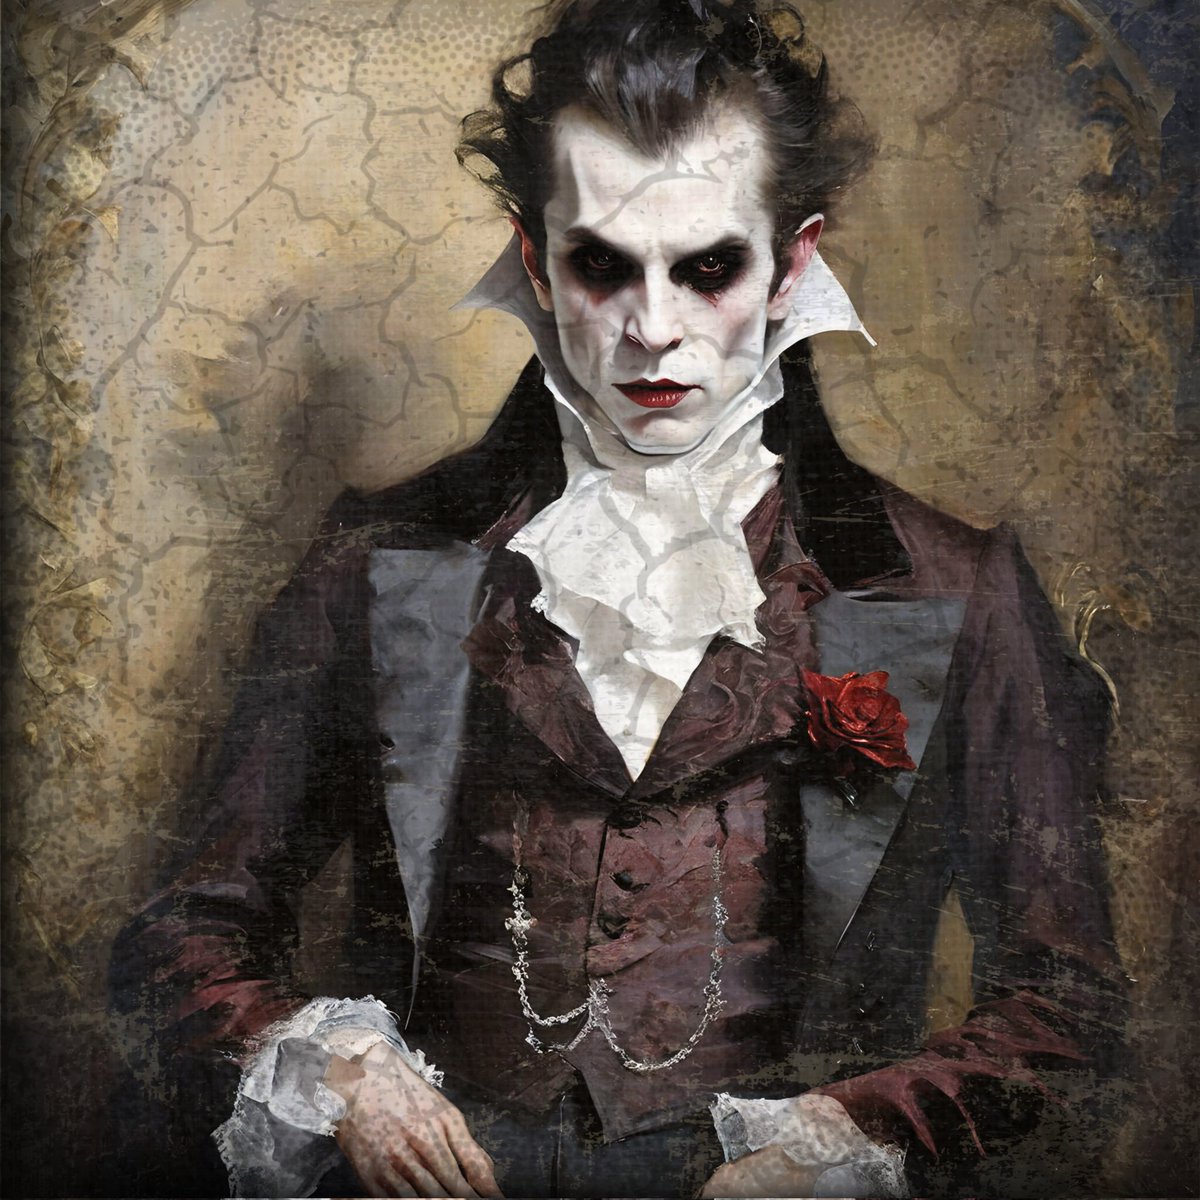 The Count
#Vampire #classicvampire #vintagehorror #vampircore #sinister #Dracula